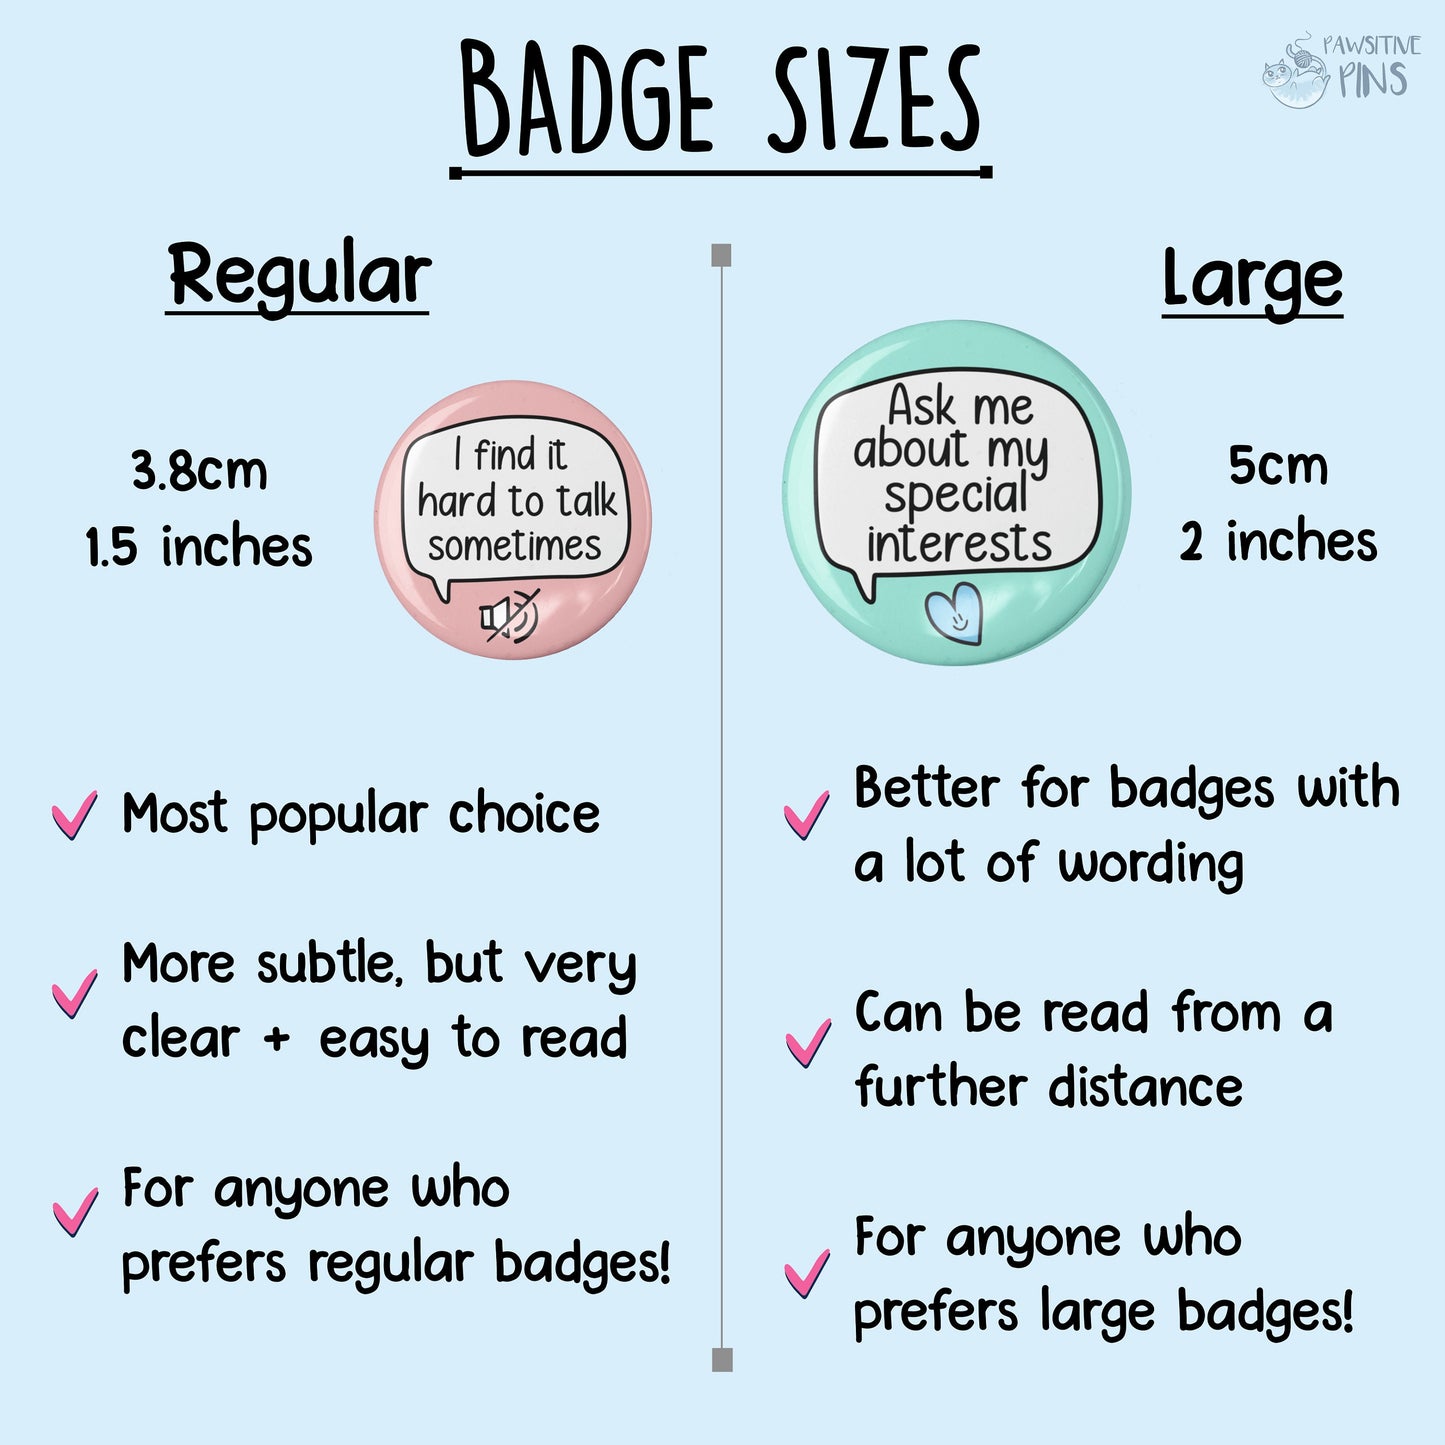 I Have Poor Balance - Pin Badge